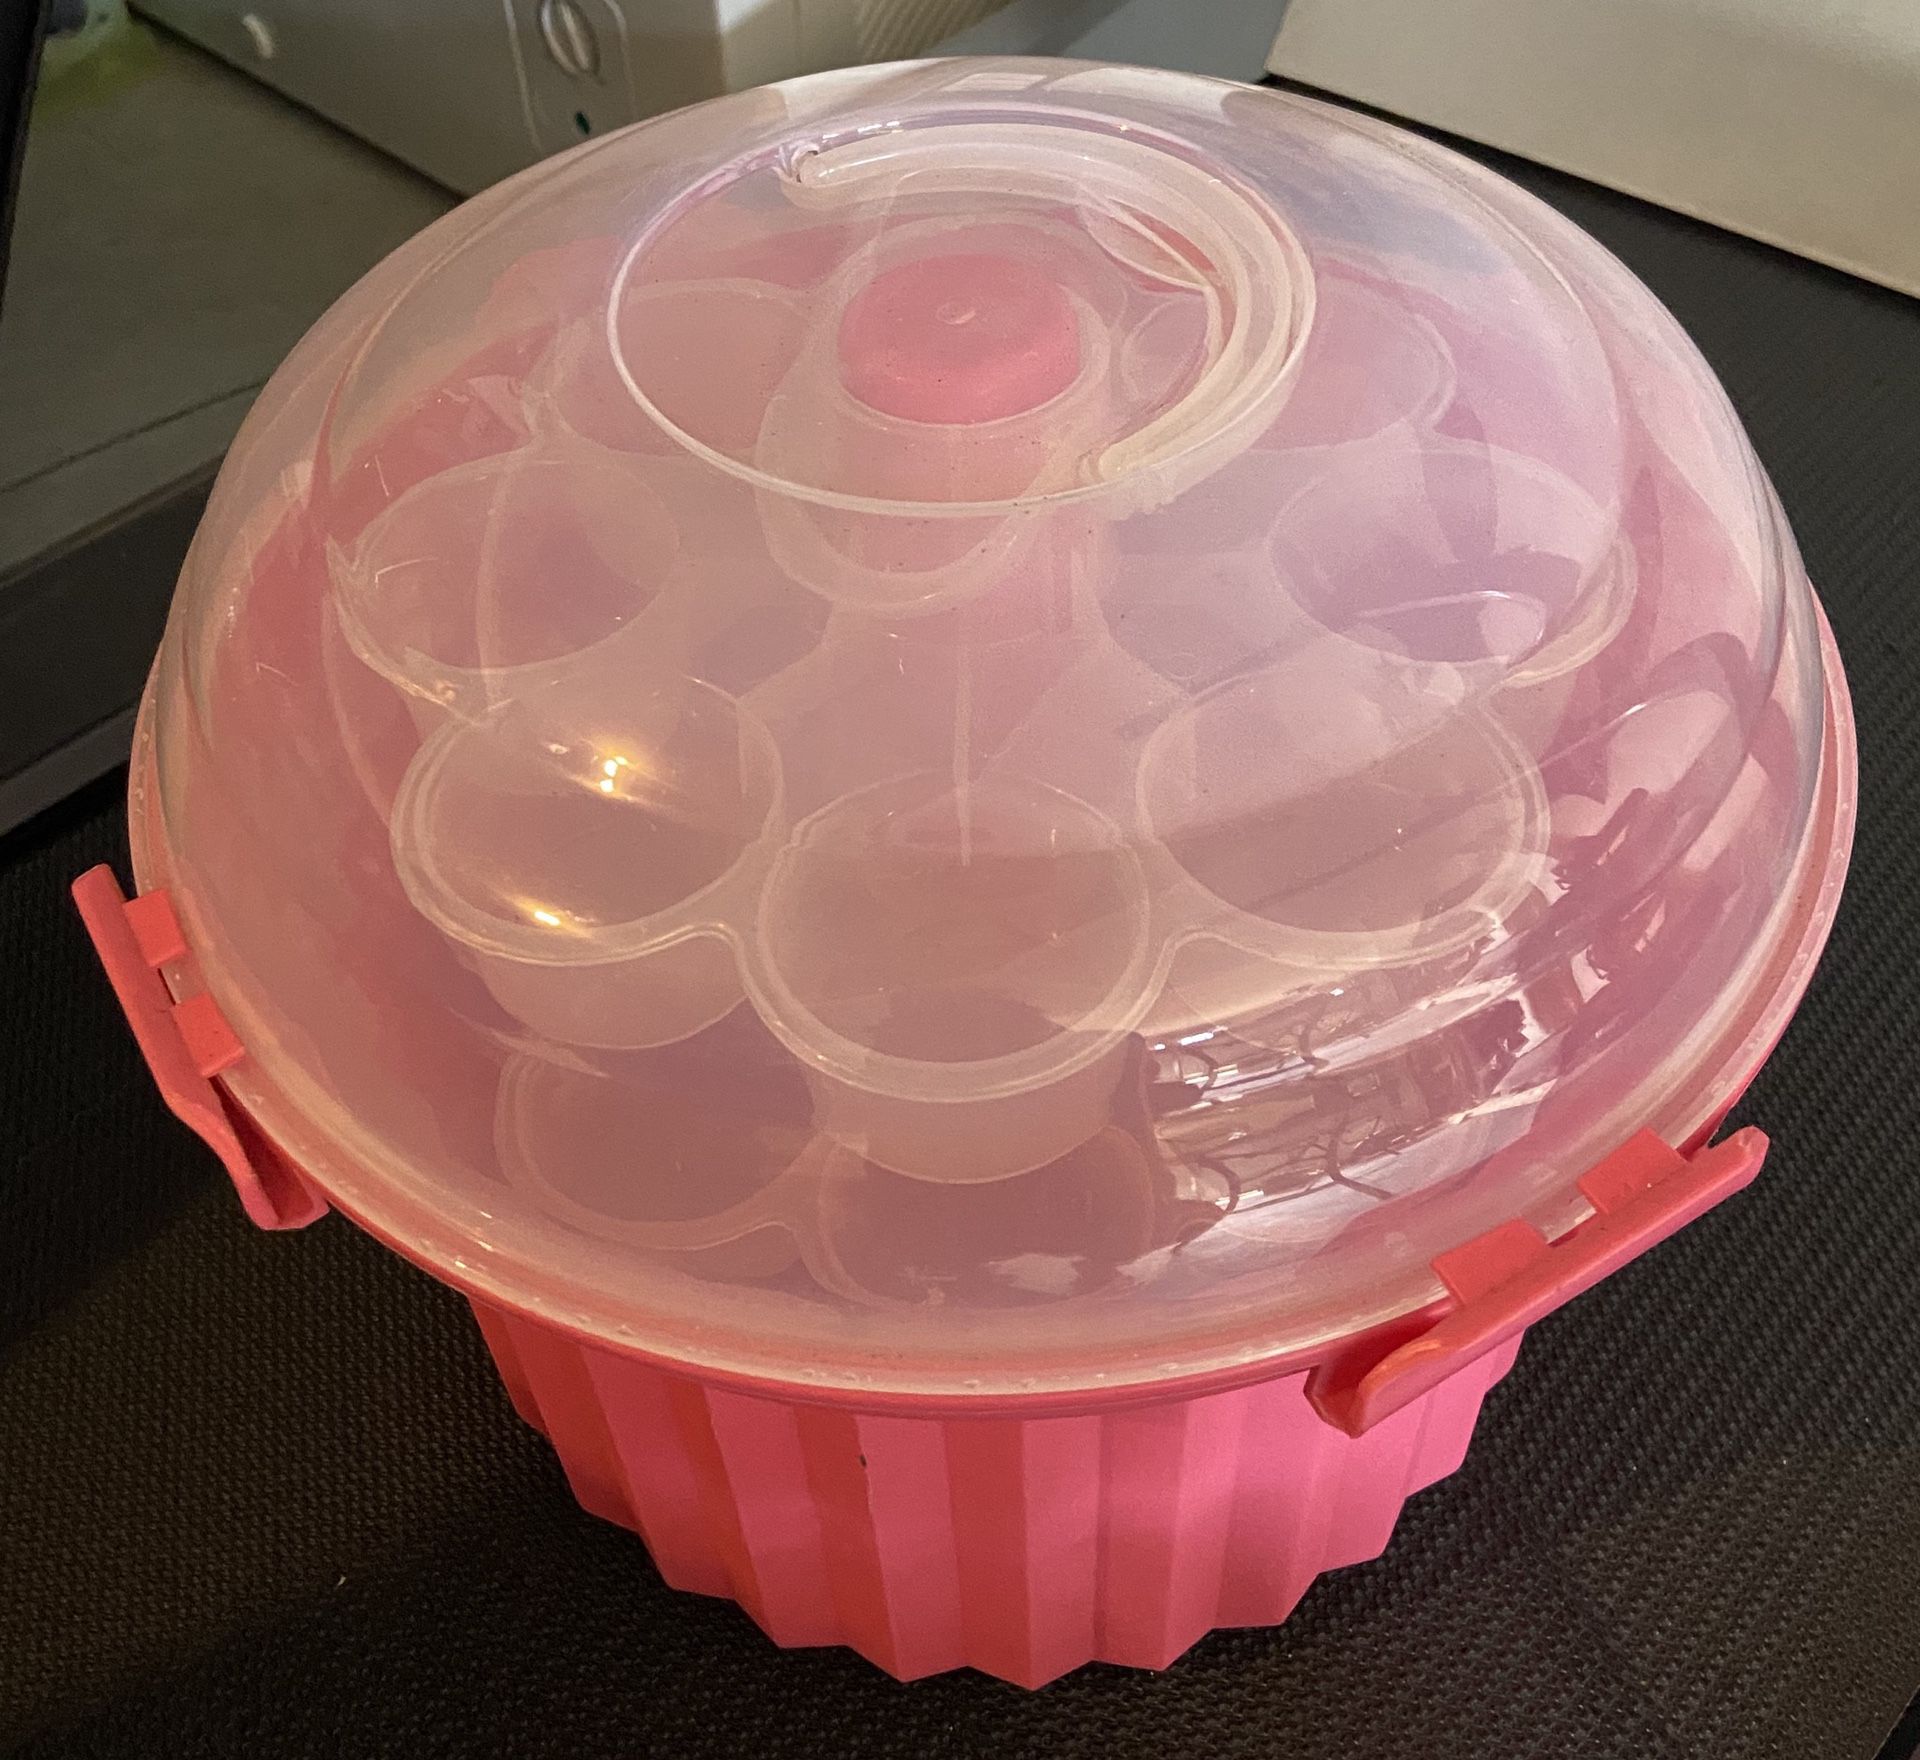 Cupcake storage container